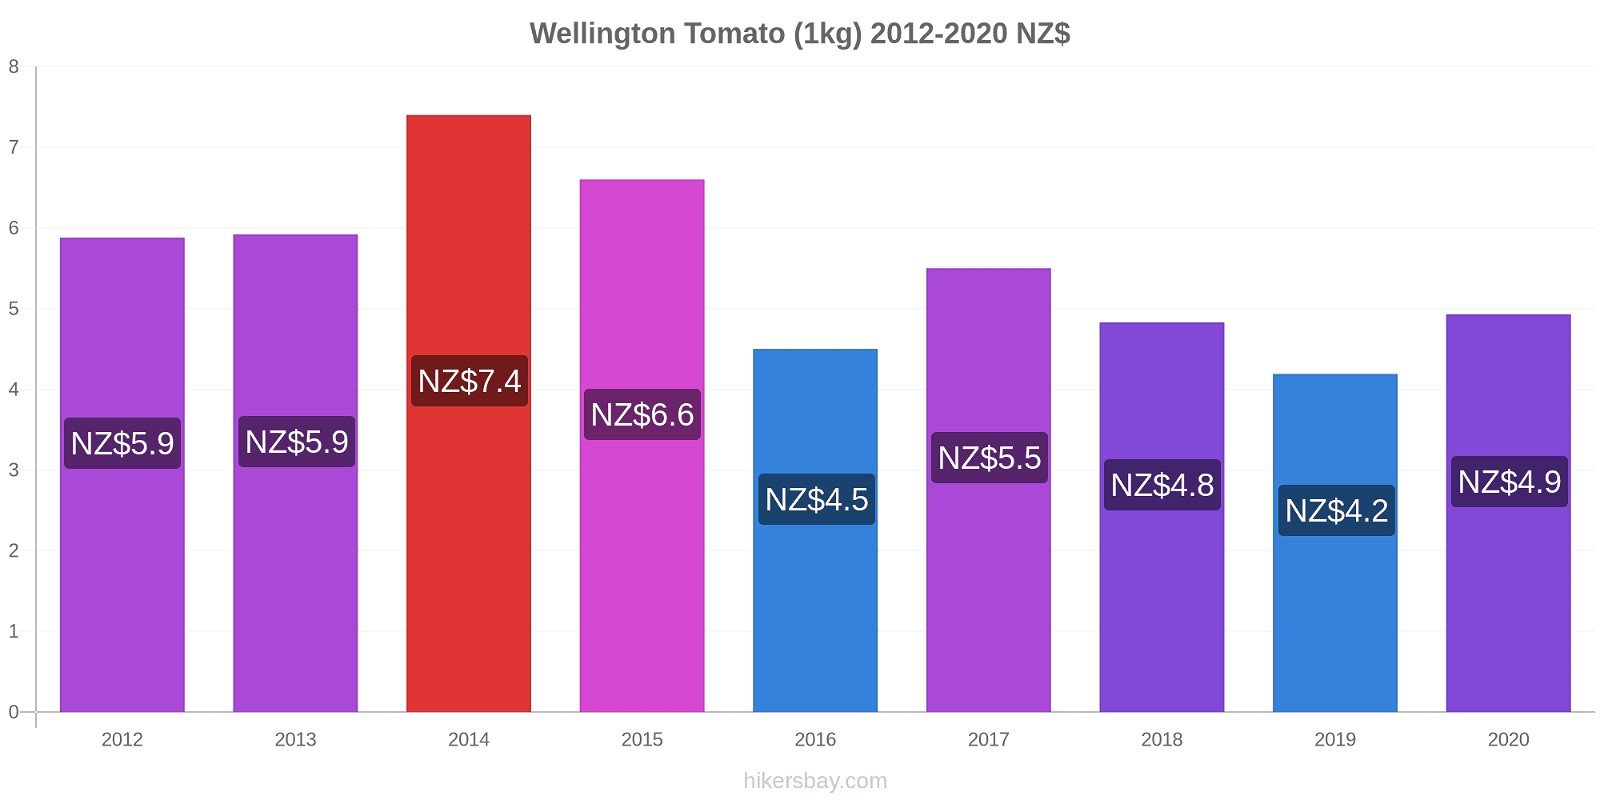 Wellington price changes Tomato (1kg) hikersbay.com